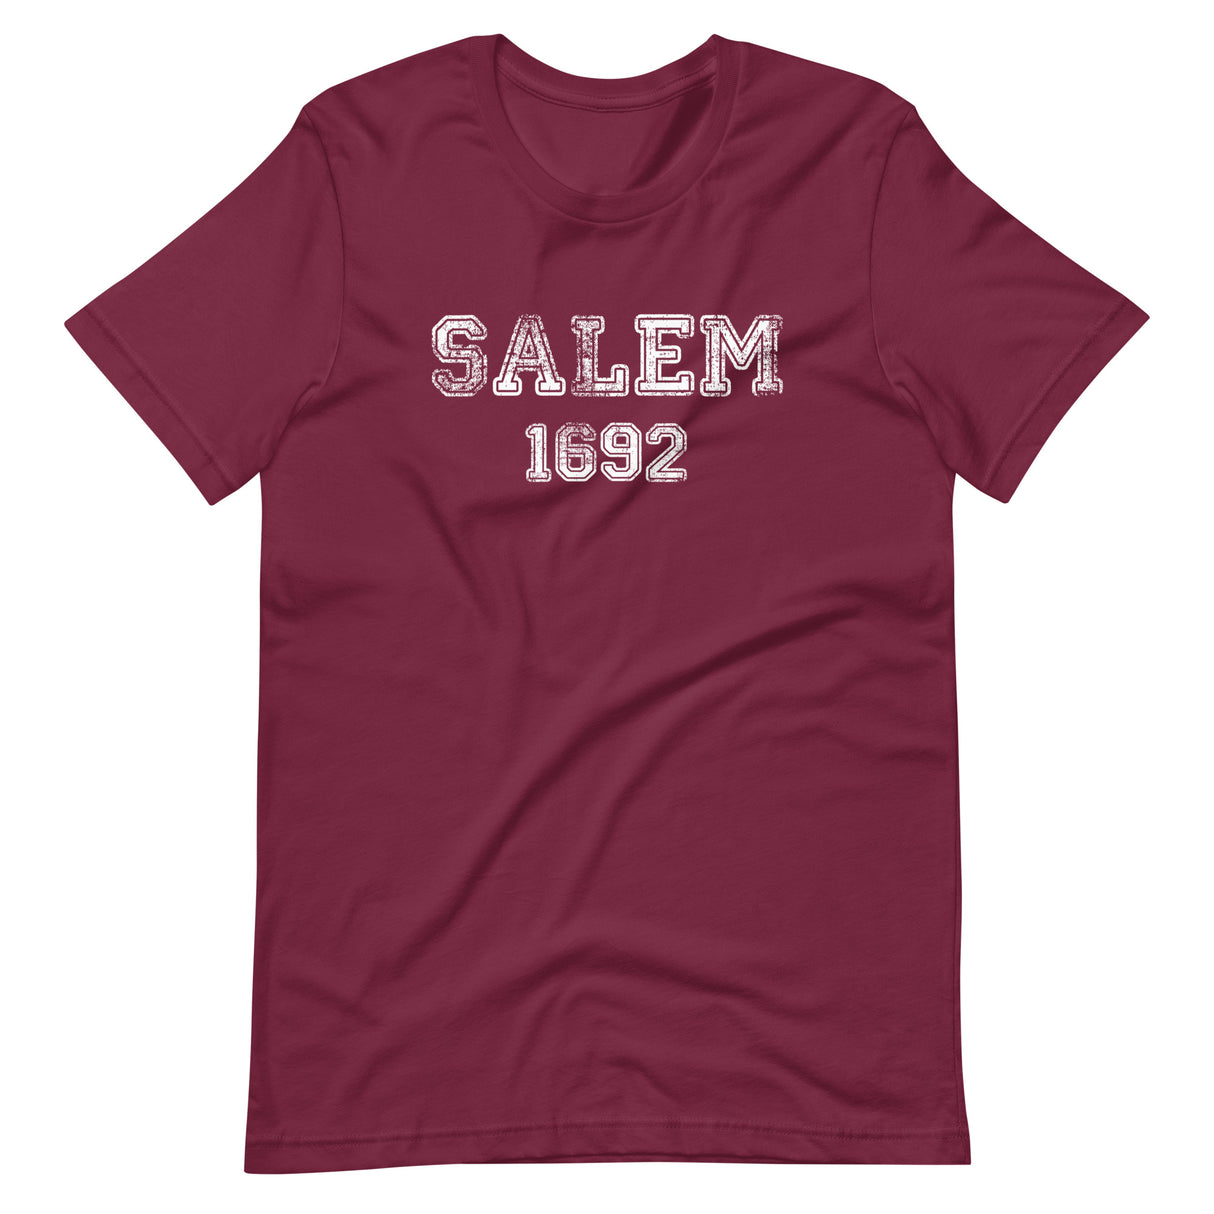 Salem 1692 College Shirt